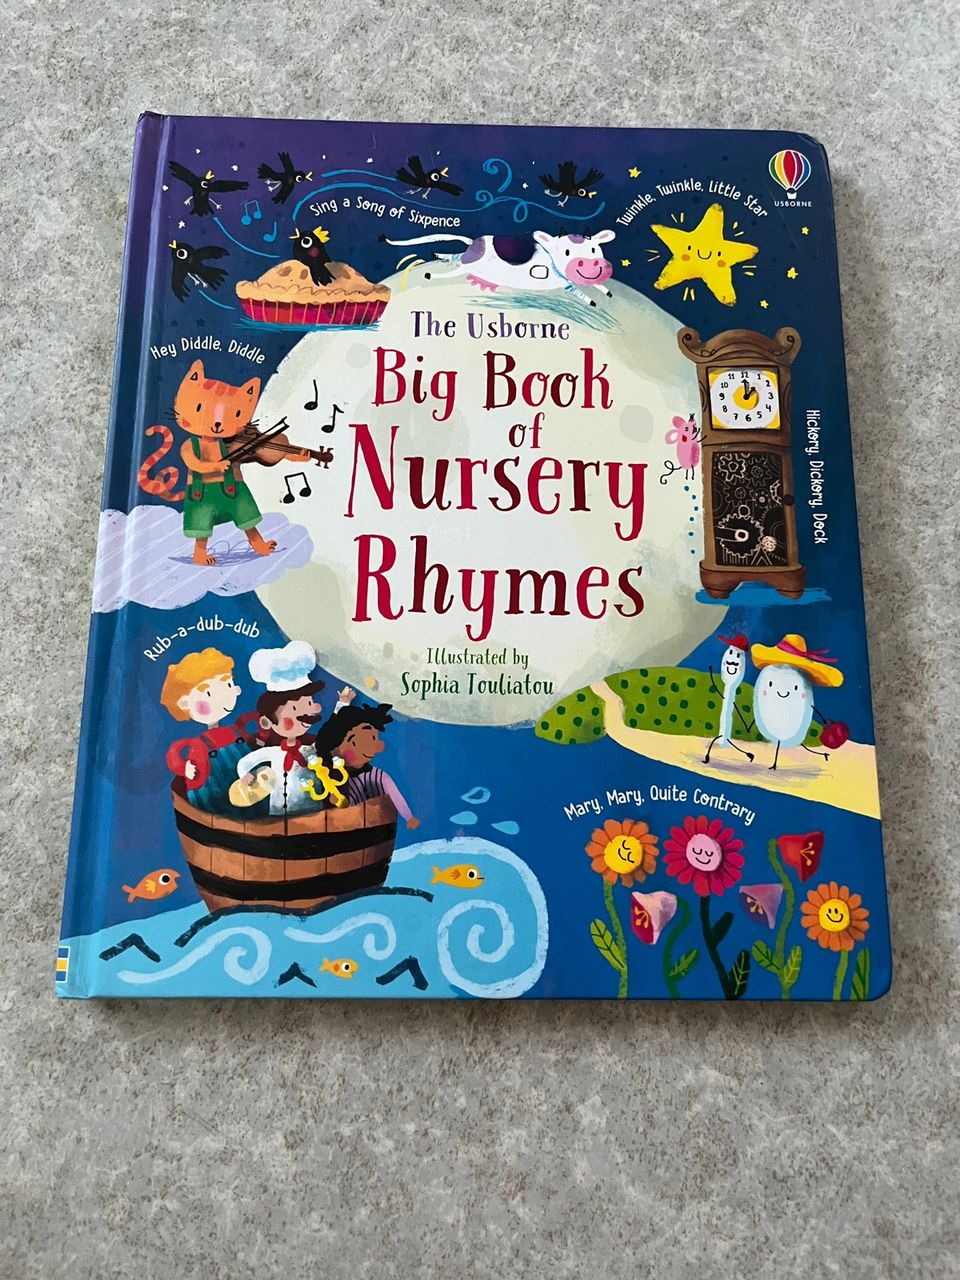 The Usborne Big Book of Nursery Ryhmes